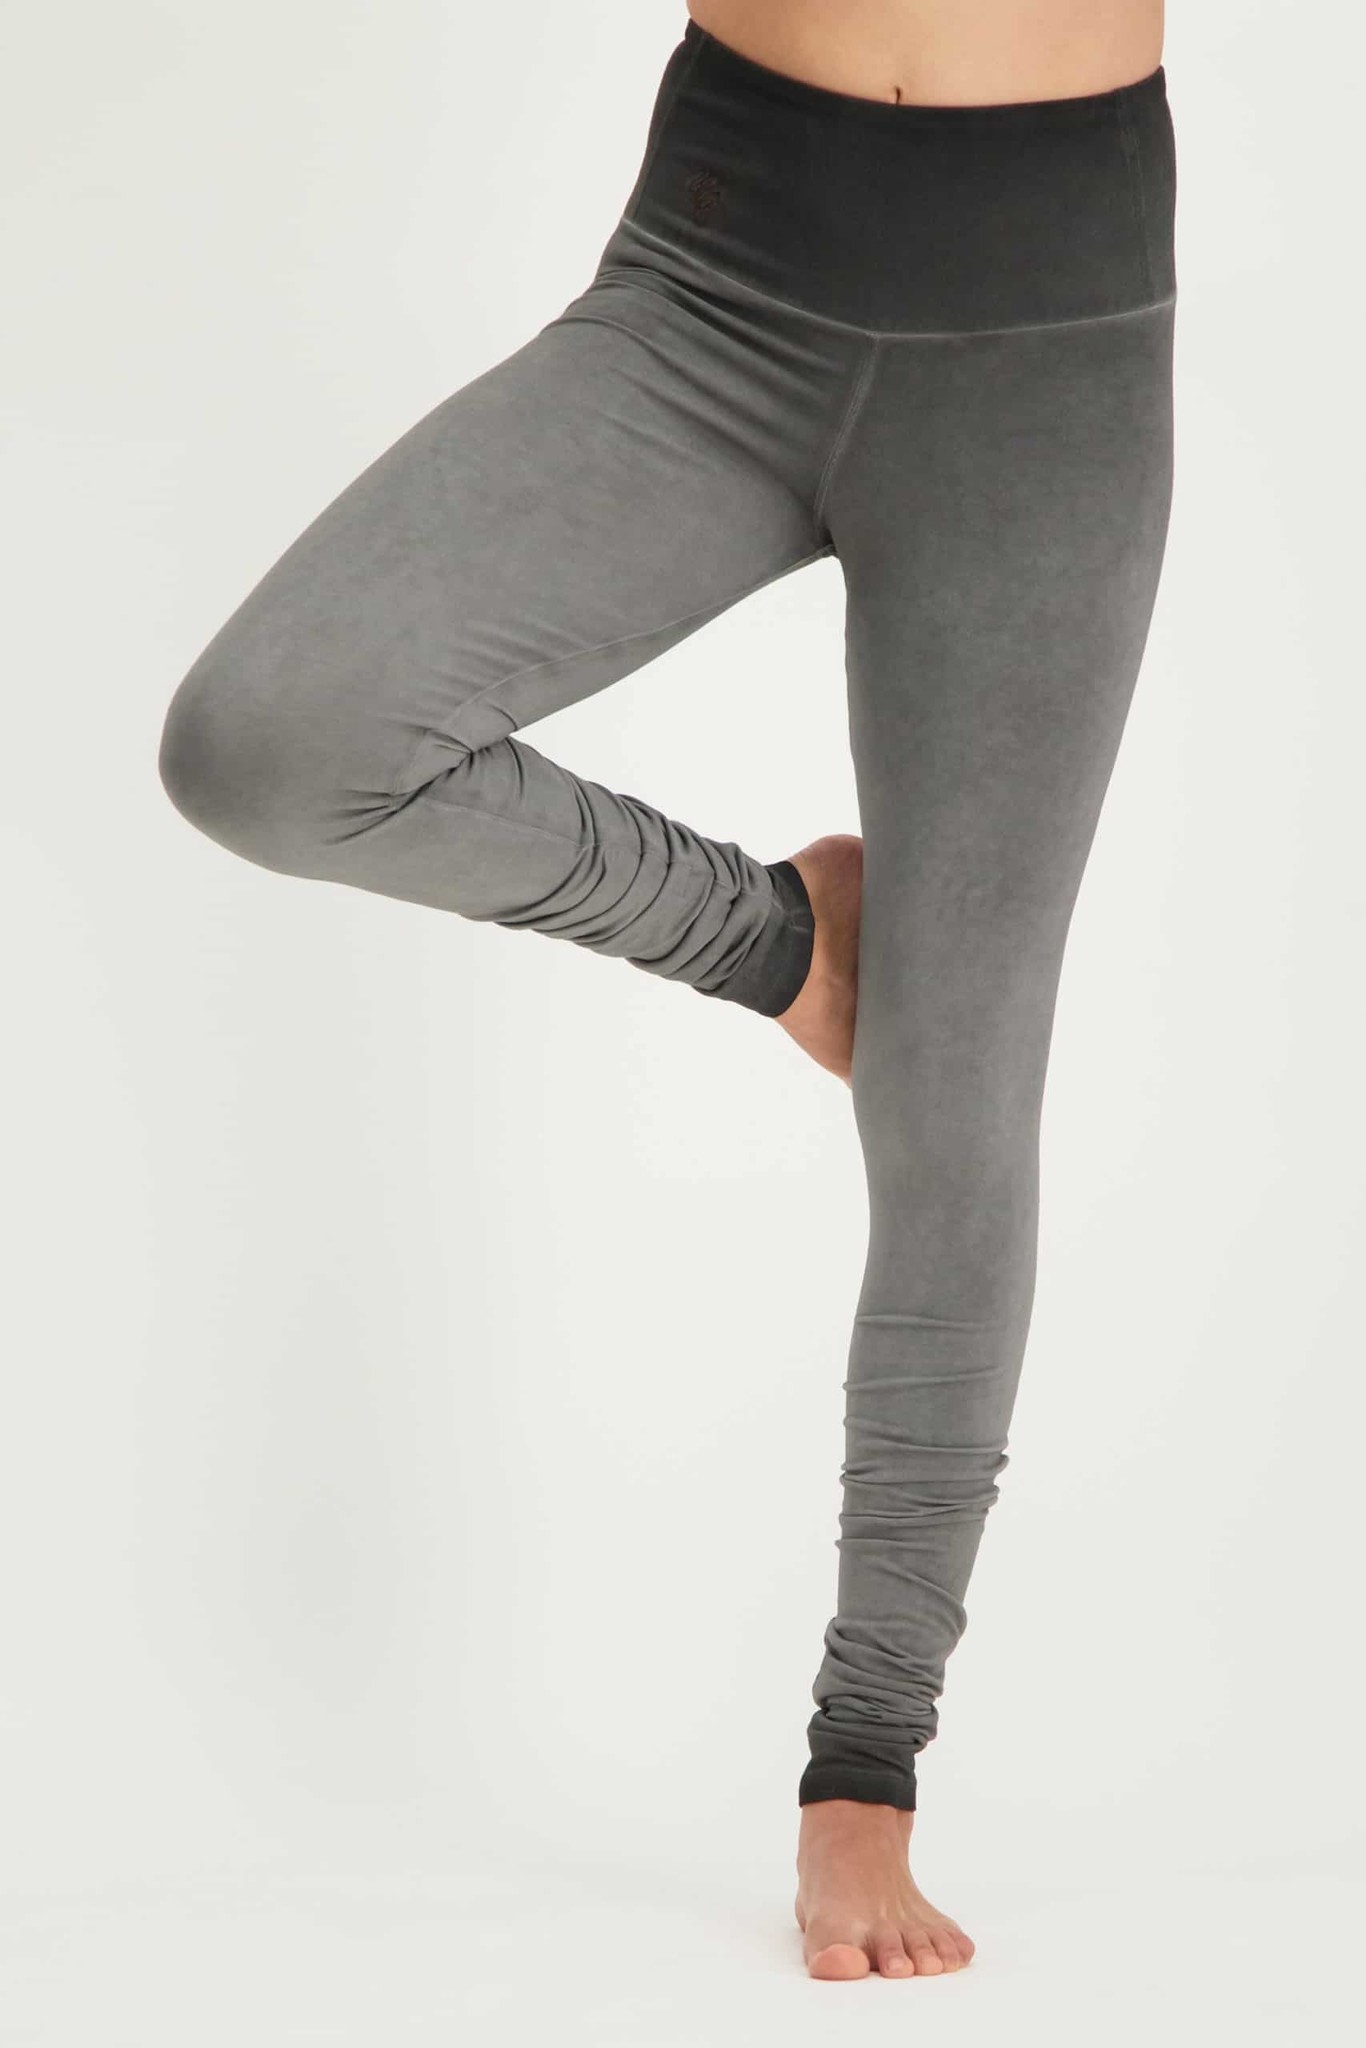 Onderbreking commentaar Verward zijn Urban Goddess Gaia Yoga Legging - Off Black - Yogisha Amsterdam